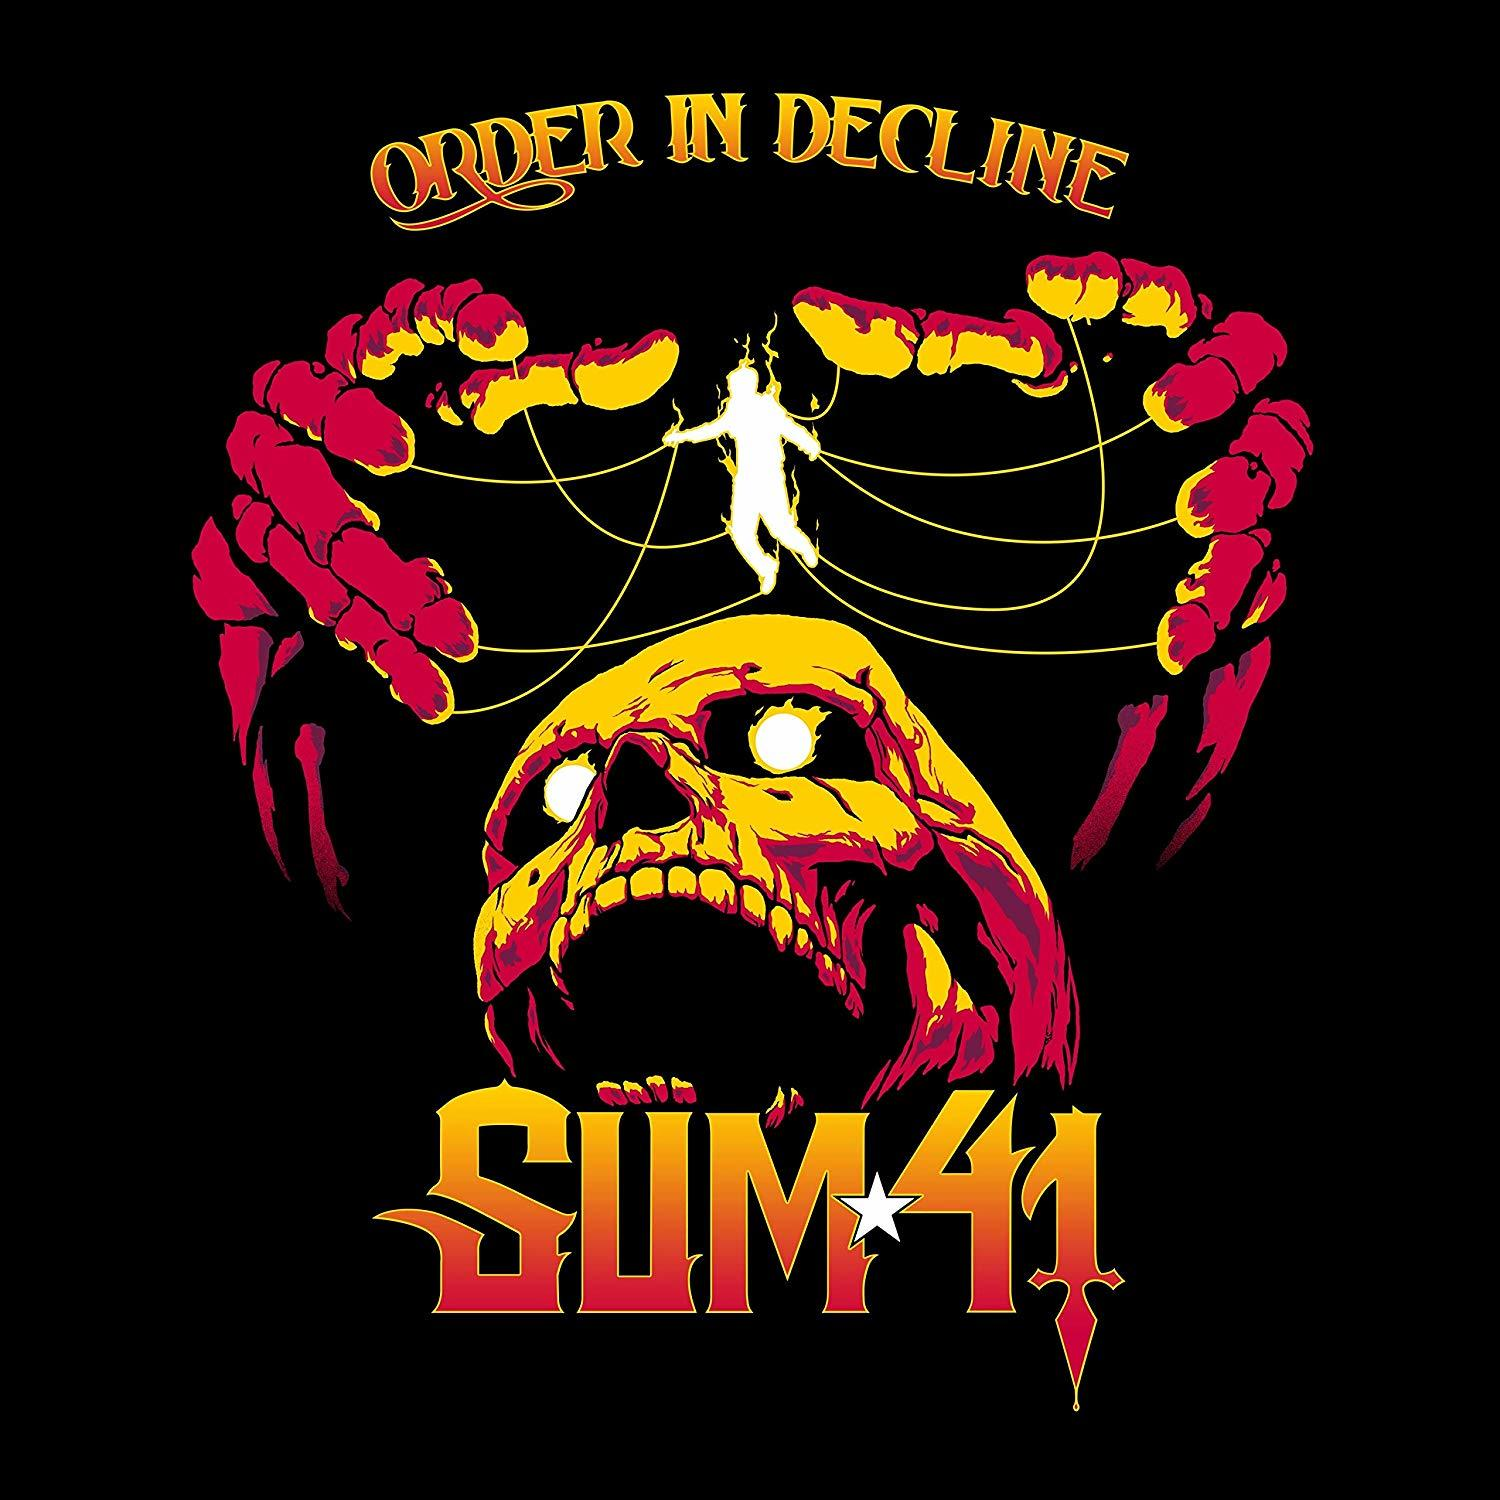 Sum 41 (CD) - In Order Decline 